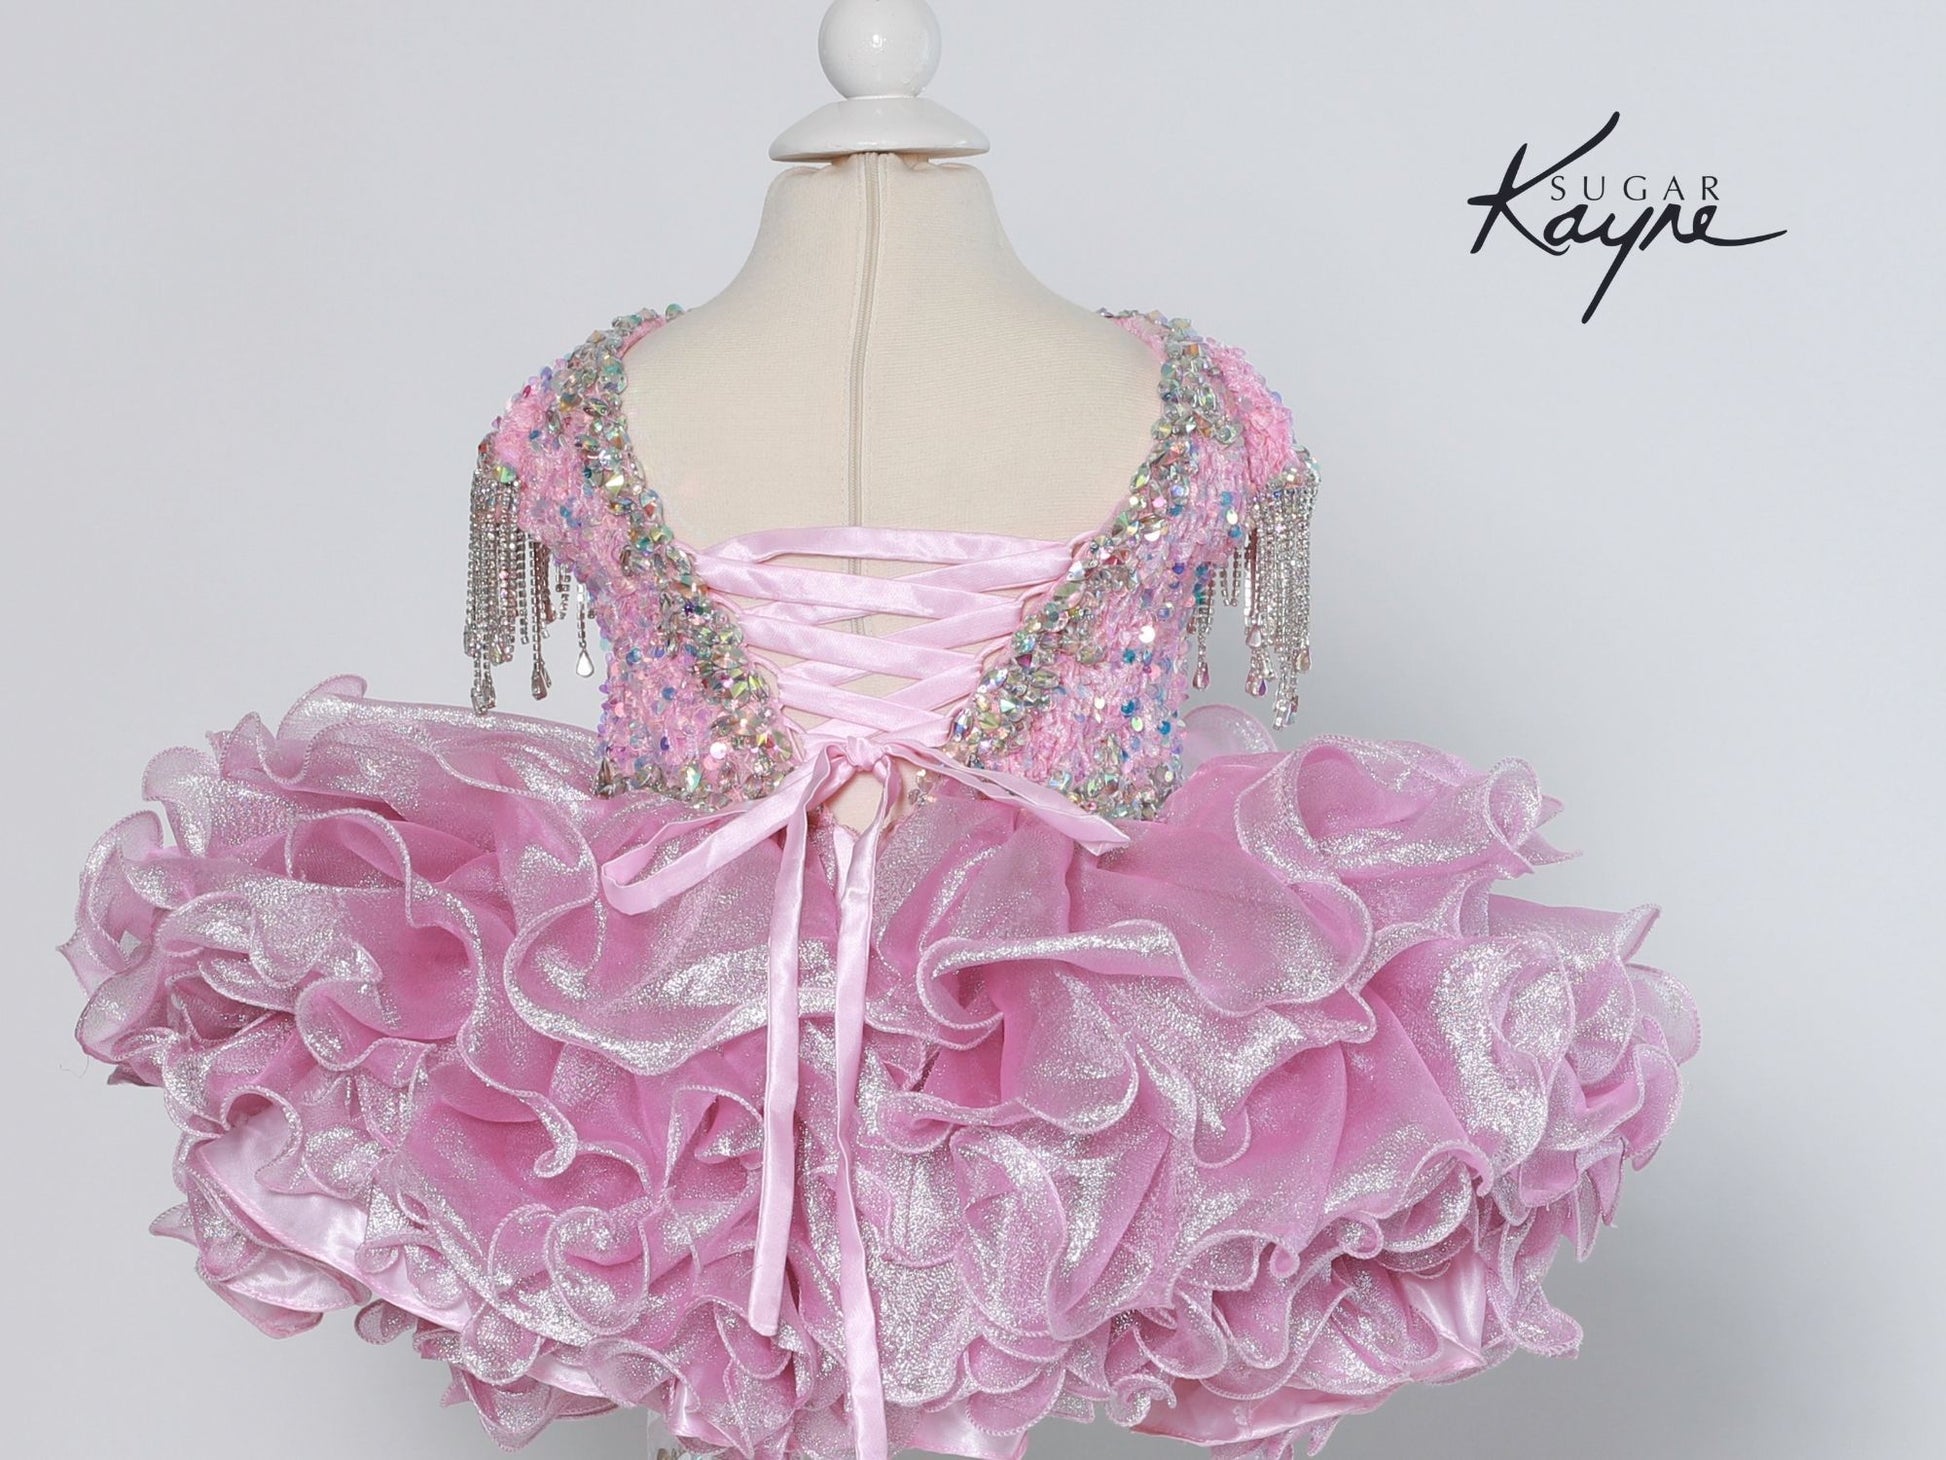 Sugar Kayne C203 Short Girls Cupcake Velvet Sequin Pageant Dress Crystal Fringe Tassel Cap Sleeve corset back  Sizes: 0M, 6M, 12M, 18M, 24M, 2T, 3T, 4T, 5T, 6T  Colors: Cotton Candy, Powder Blue, Unicorn